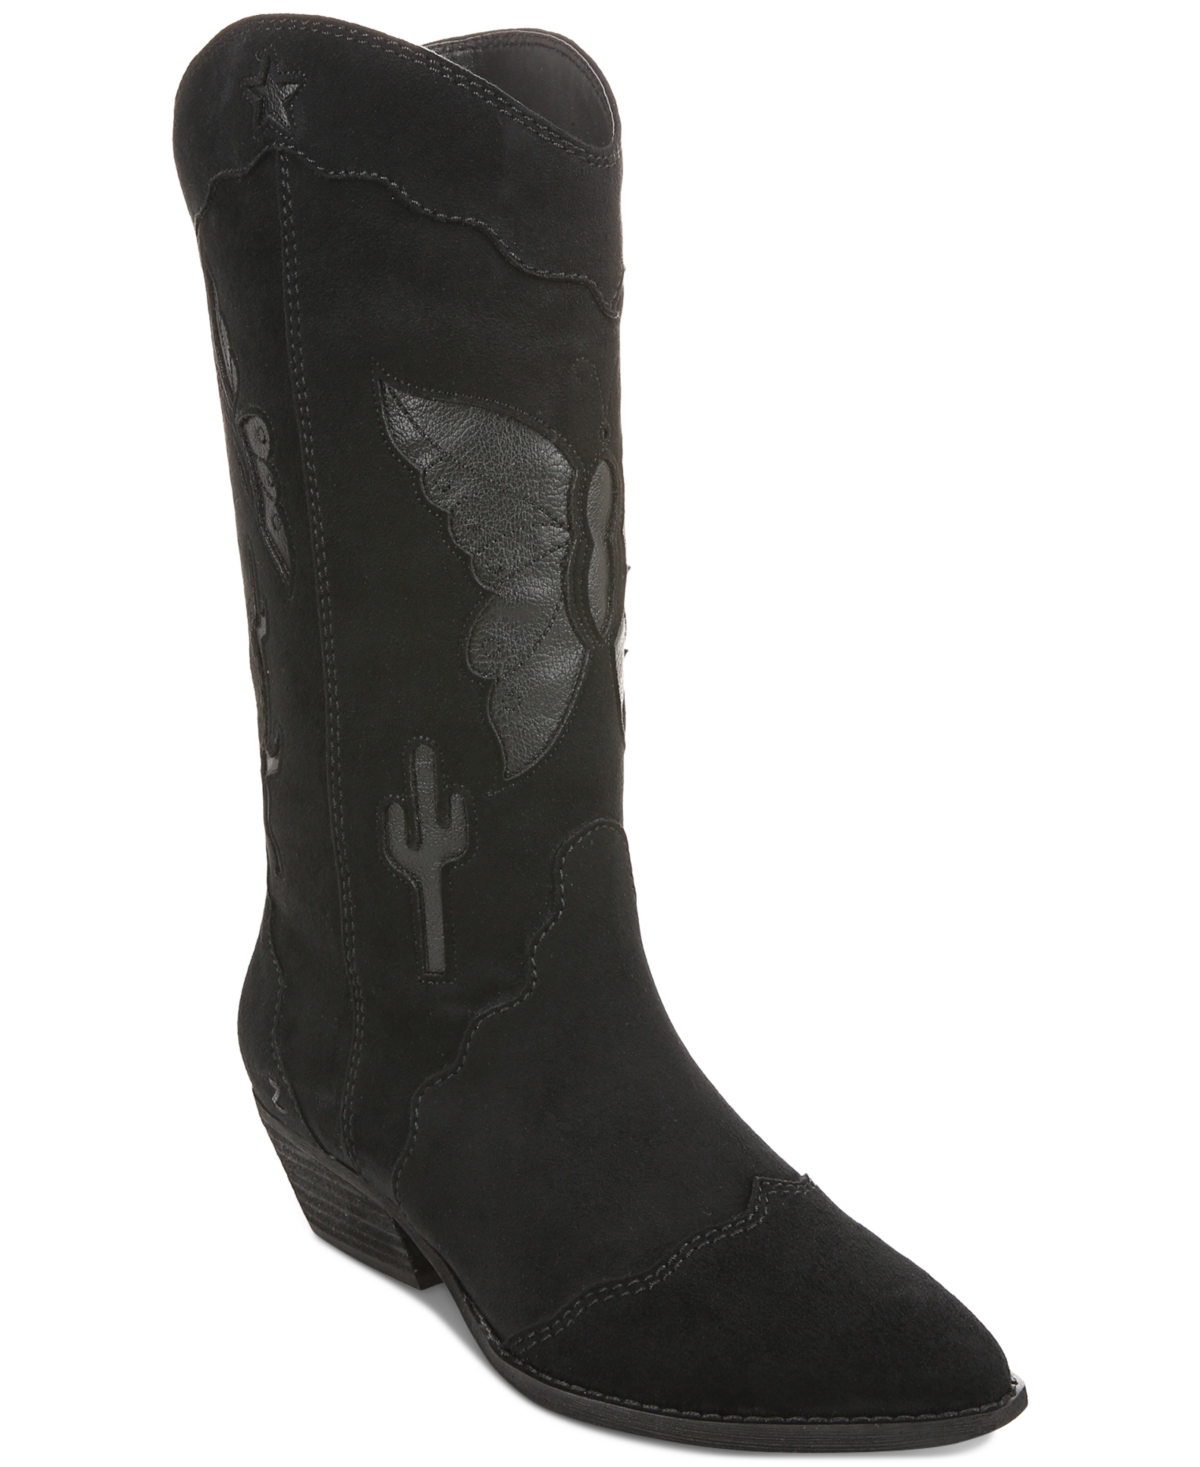 Women's Maye Desert Pull-On Cowboy Boots - Black